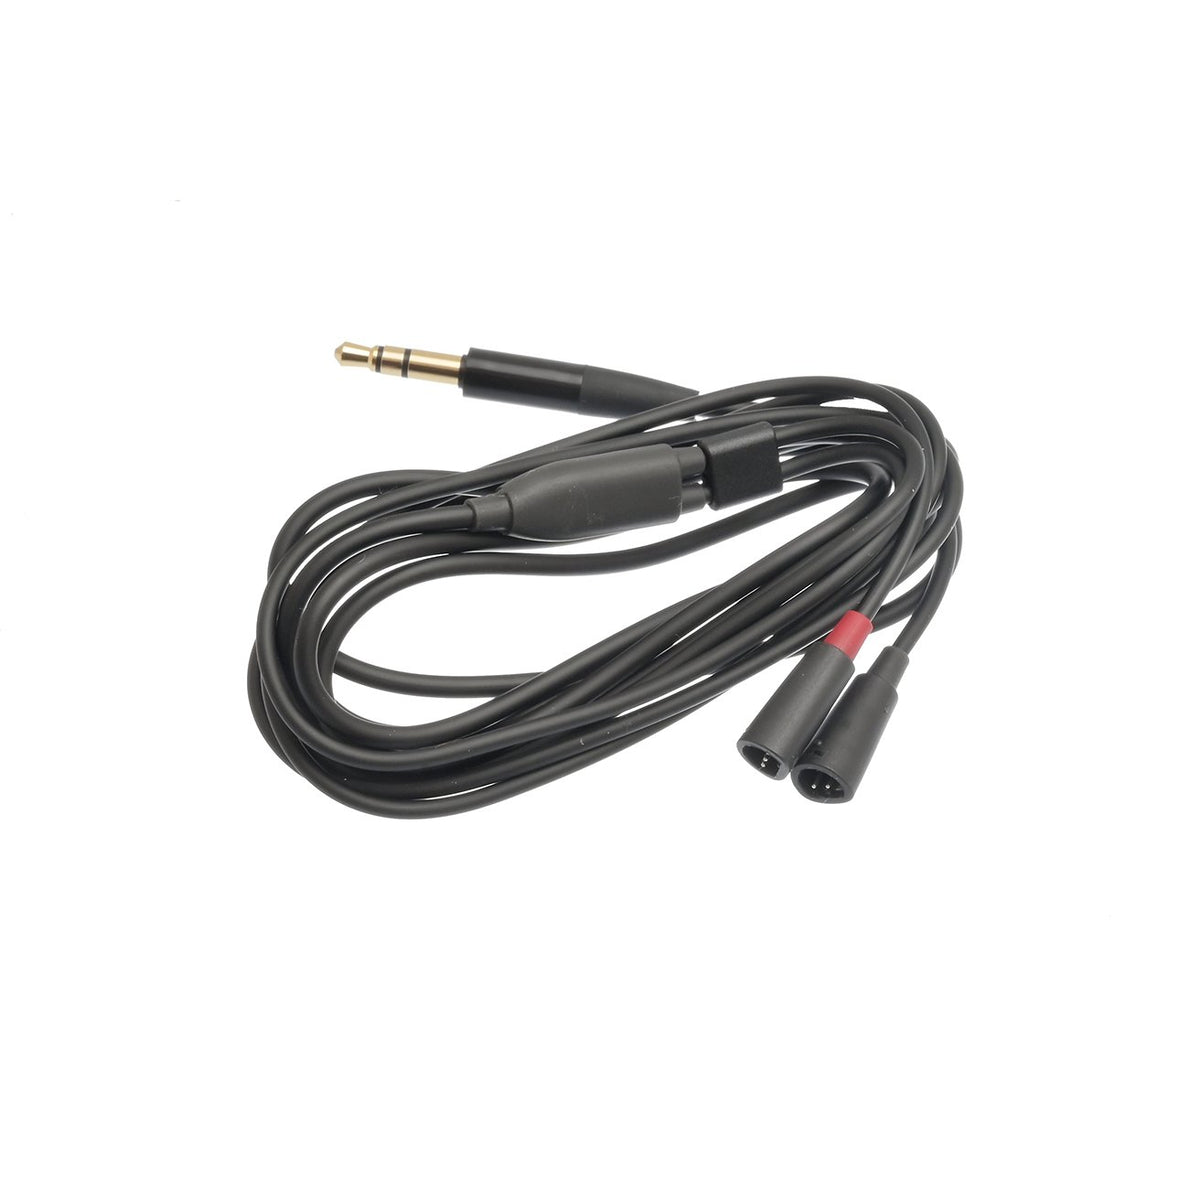 Cable IE 80 S – Sennheiser